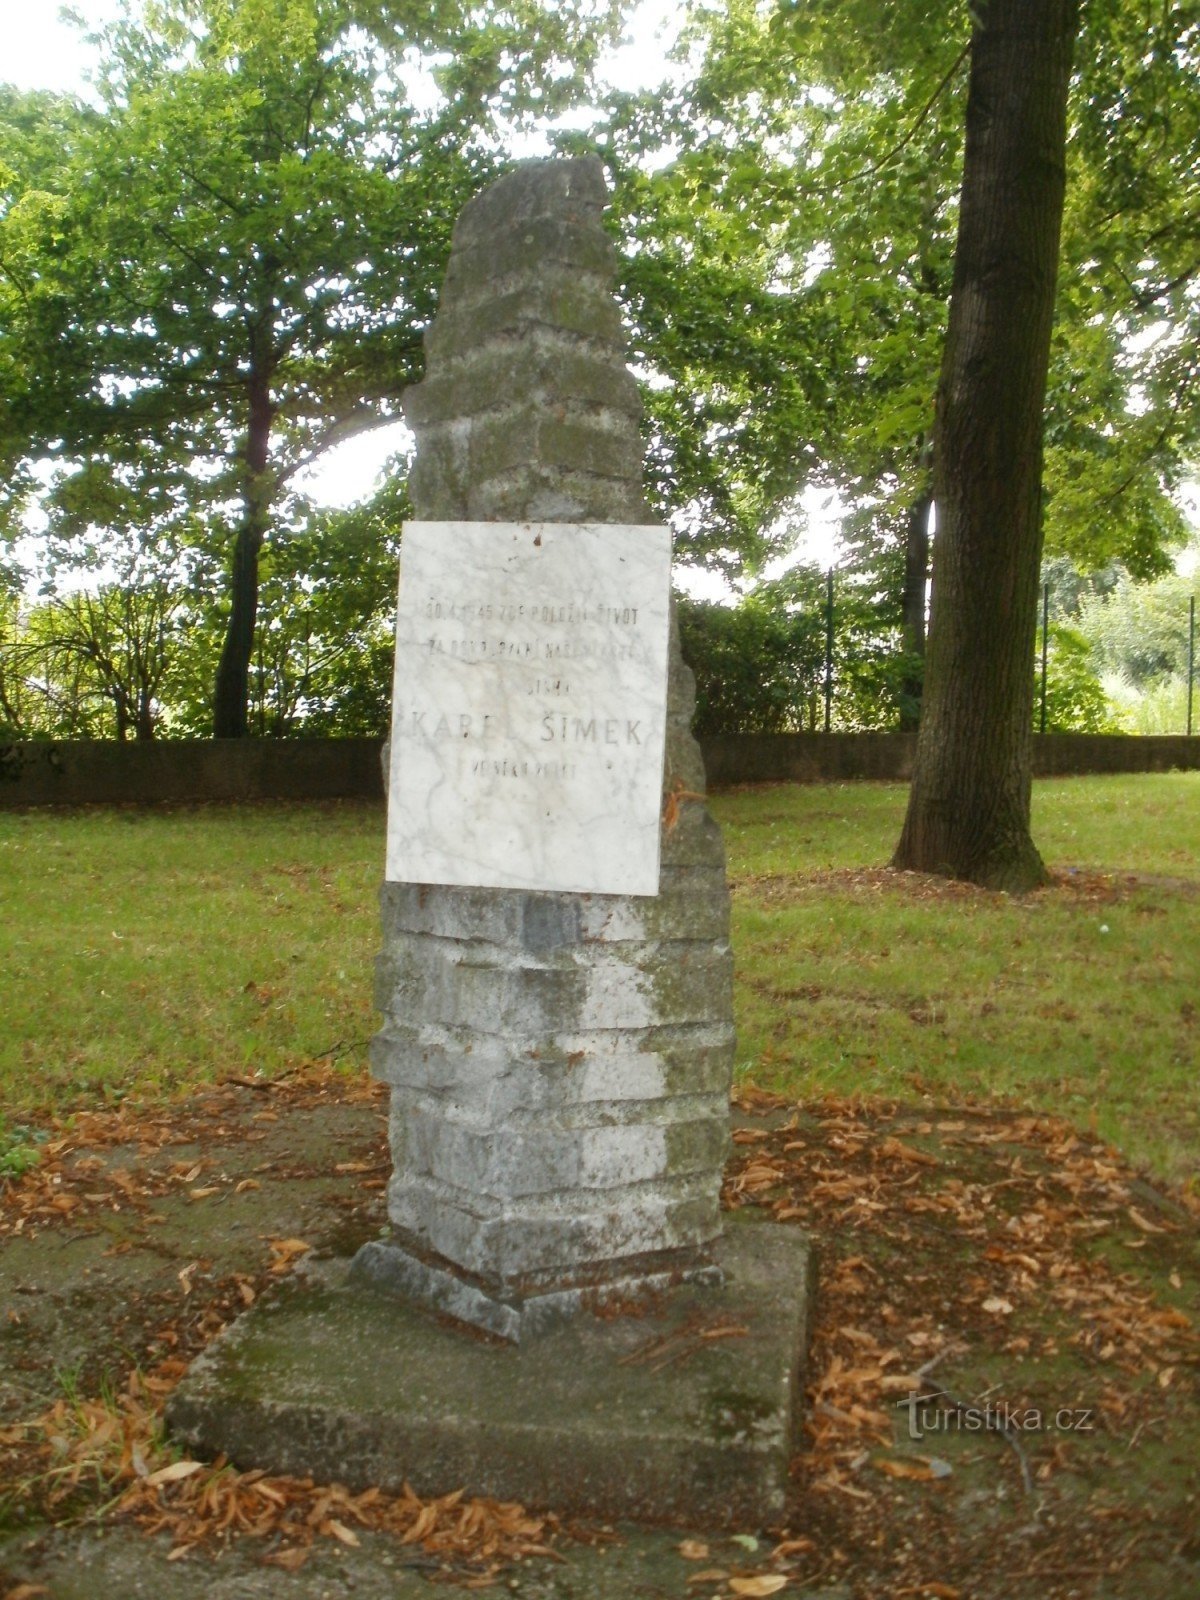 Hradec Králové - monument voor Karel Šimek